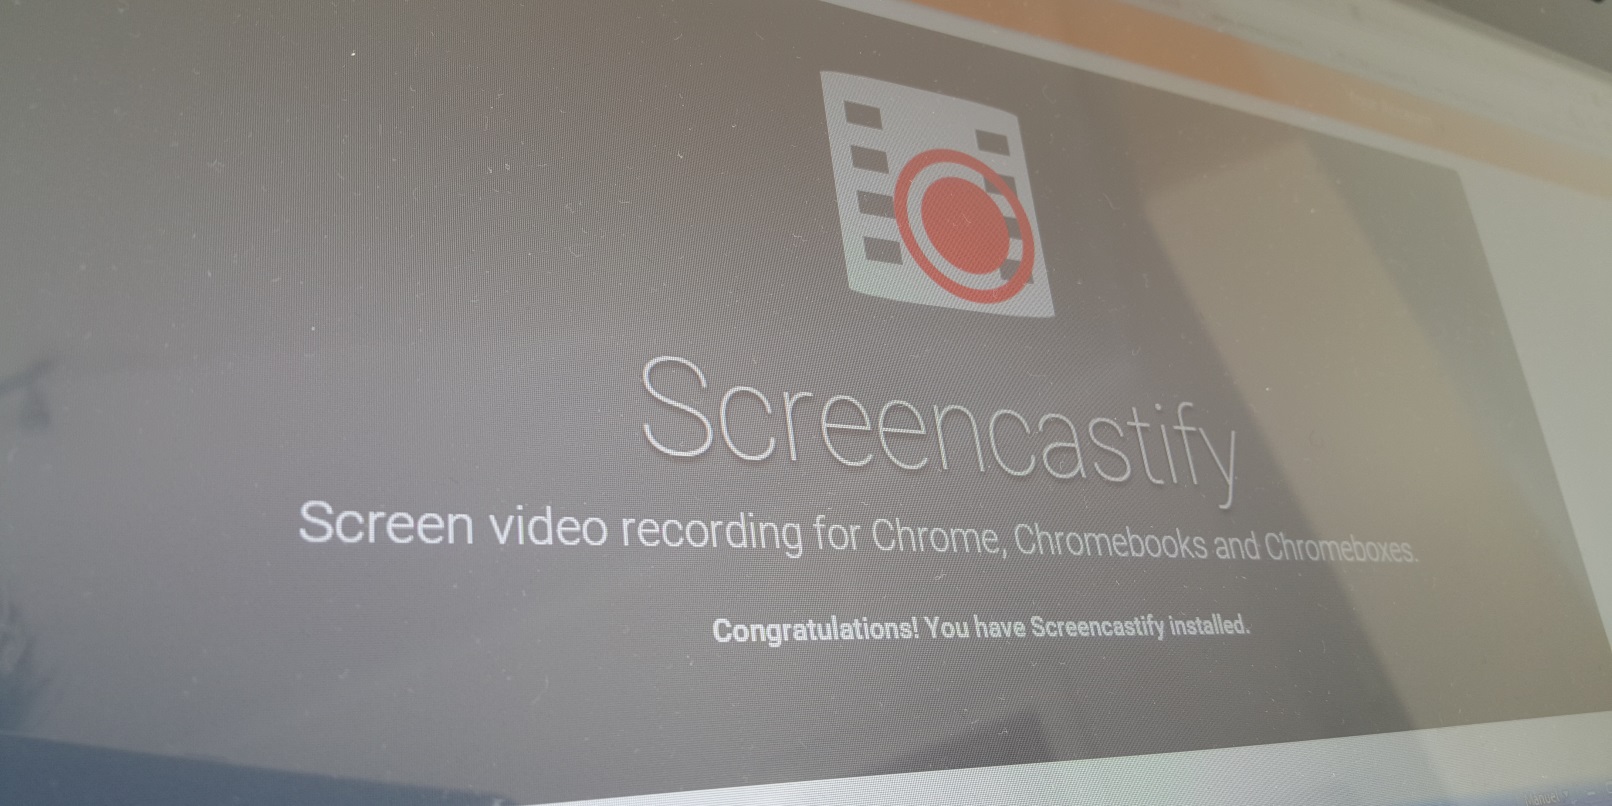 Screencastify - Screen Video Recorder